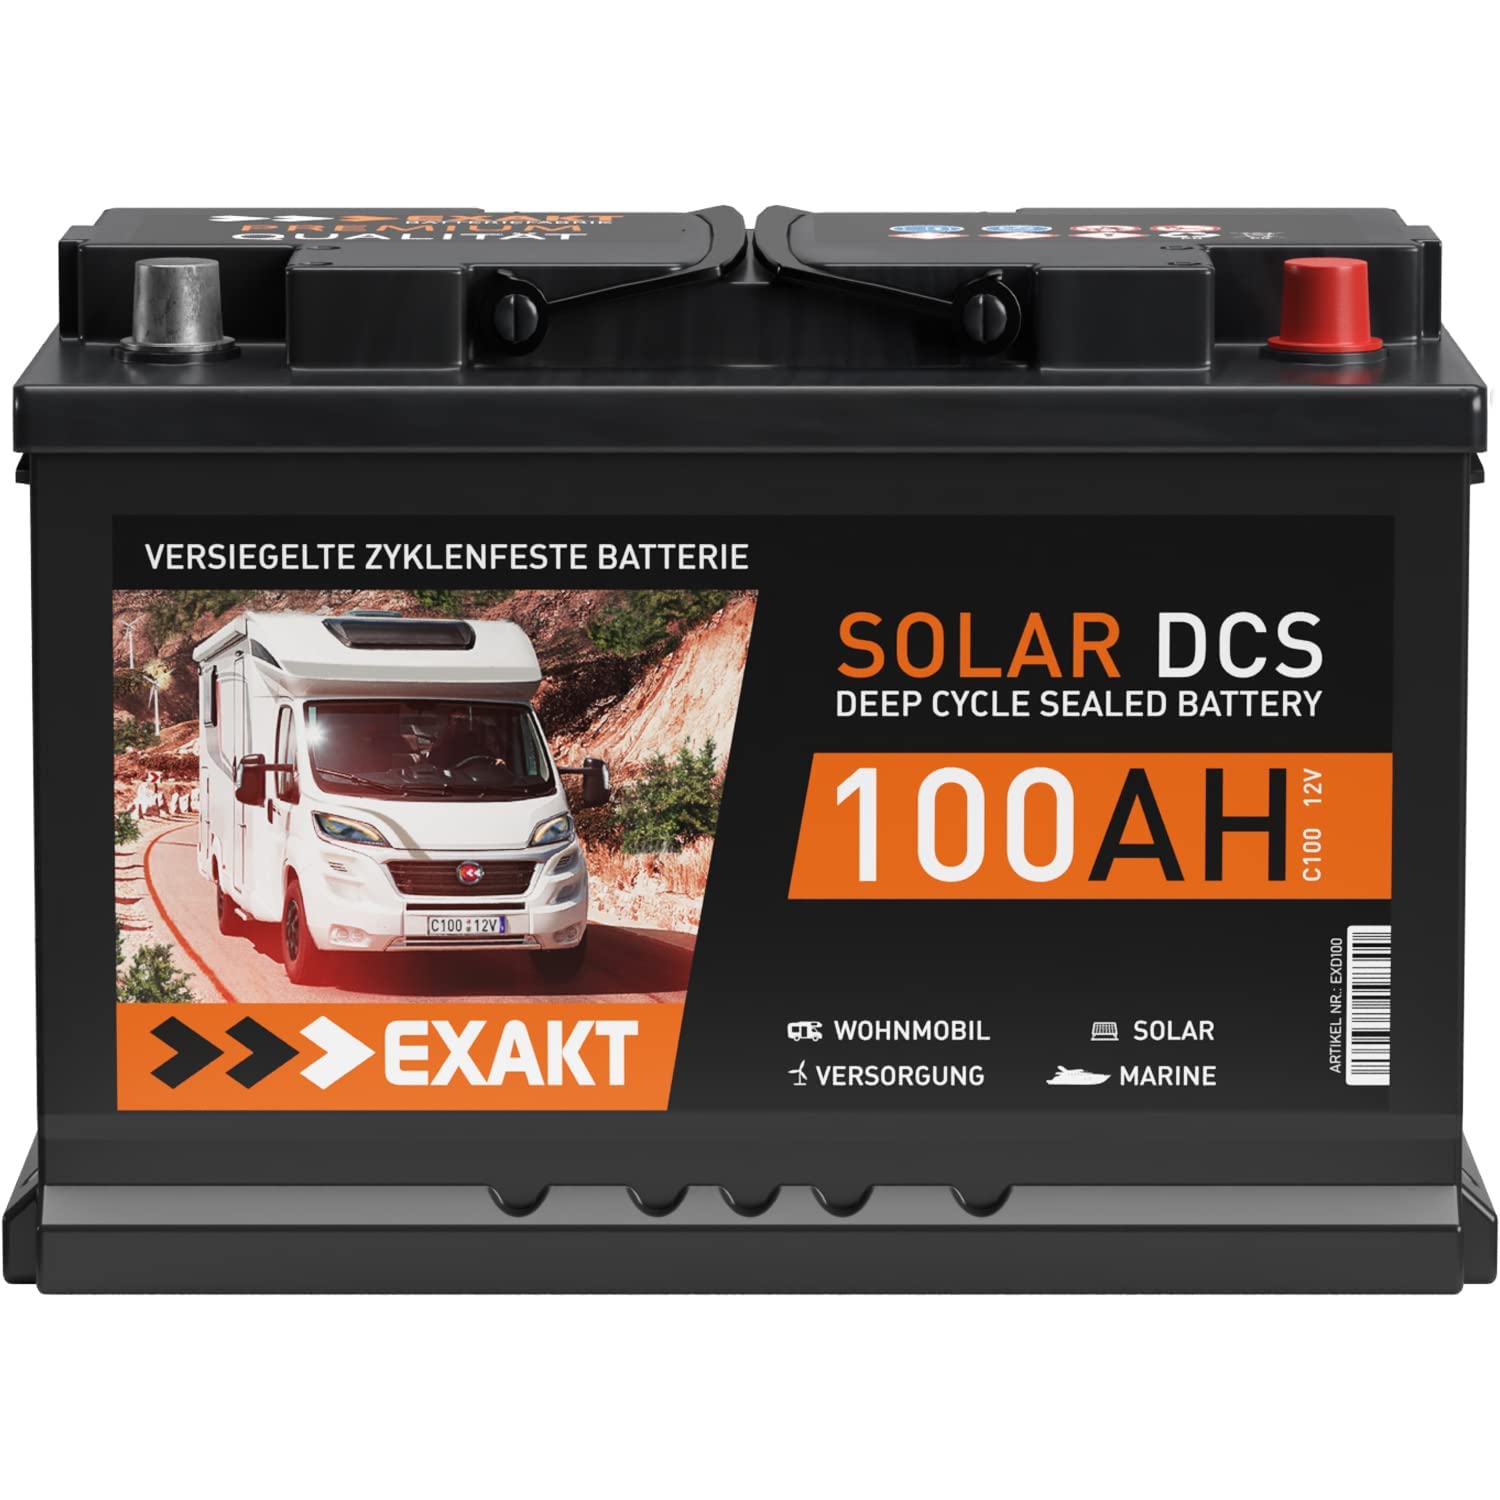 Solarbatterie 100Ah 12V EXAKT DCS Wohnmobil Versorgung Boot Solar Batterie Größenwahl (100AH 12V) von Exakt